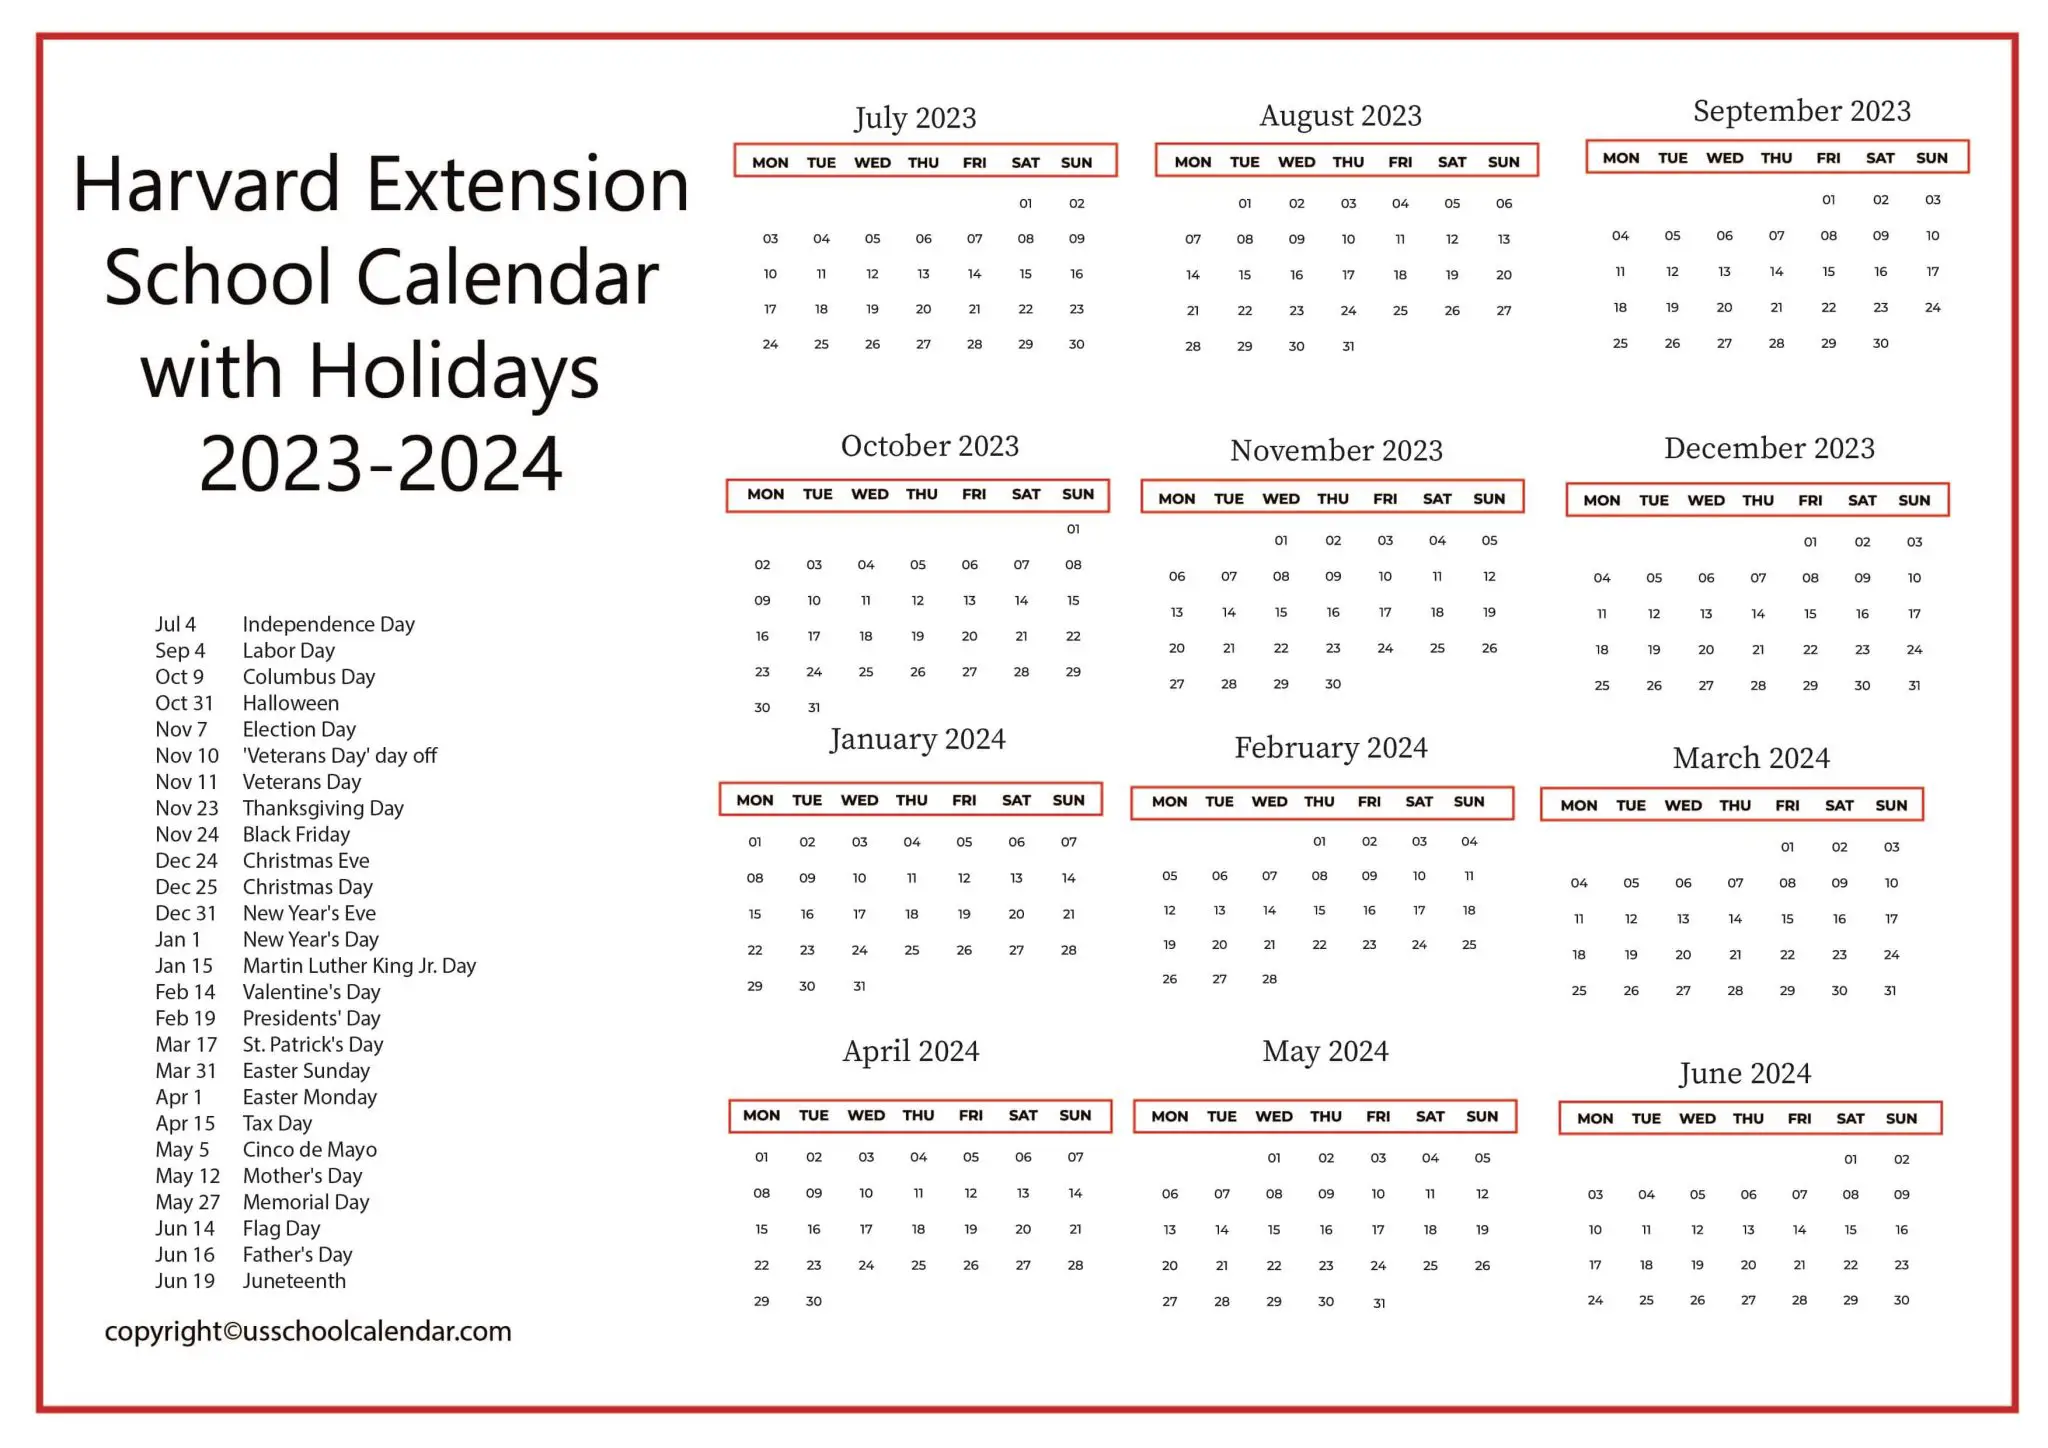 harvard-extension-school-calendar-with-holidays-2023-2024